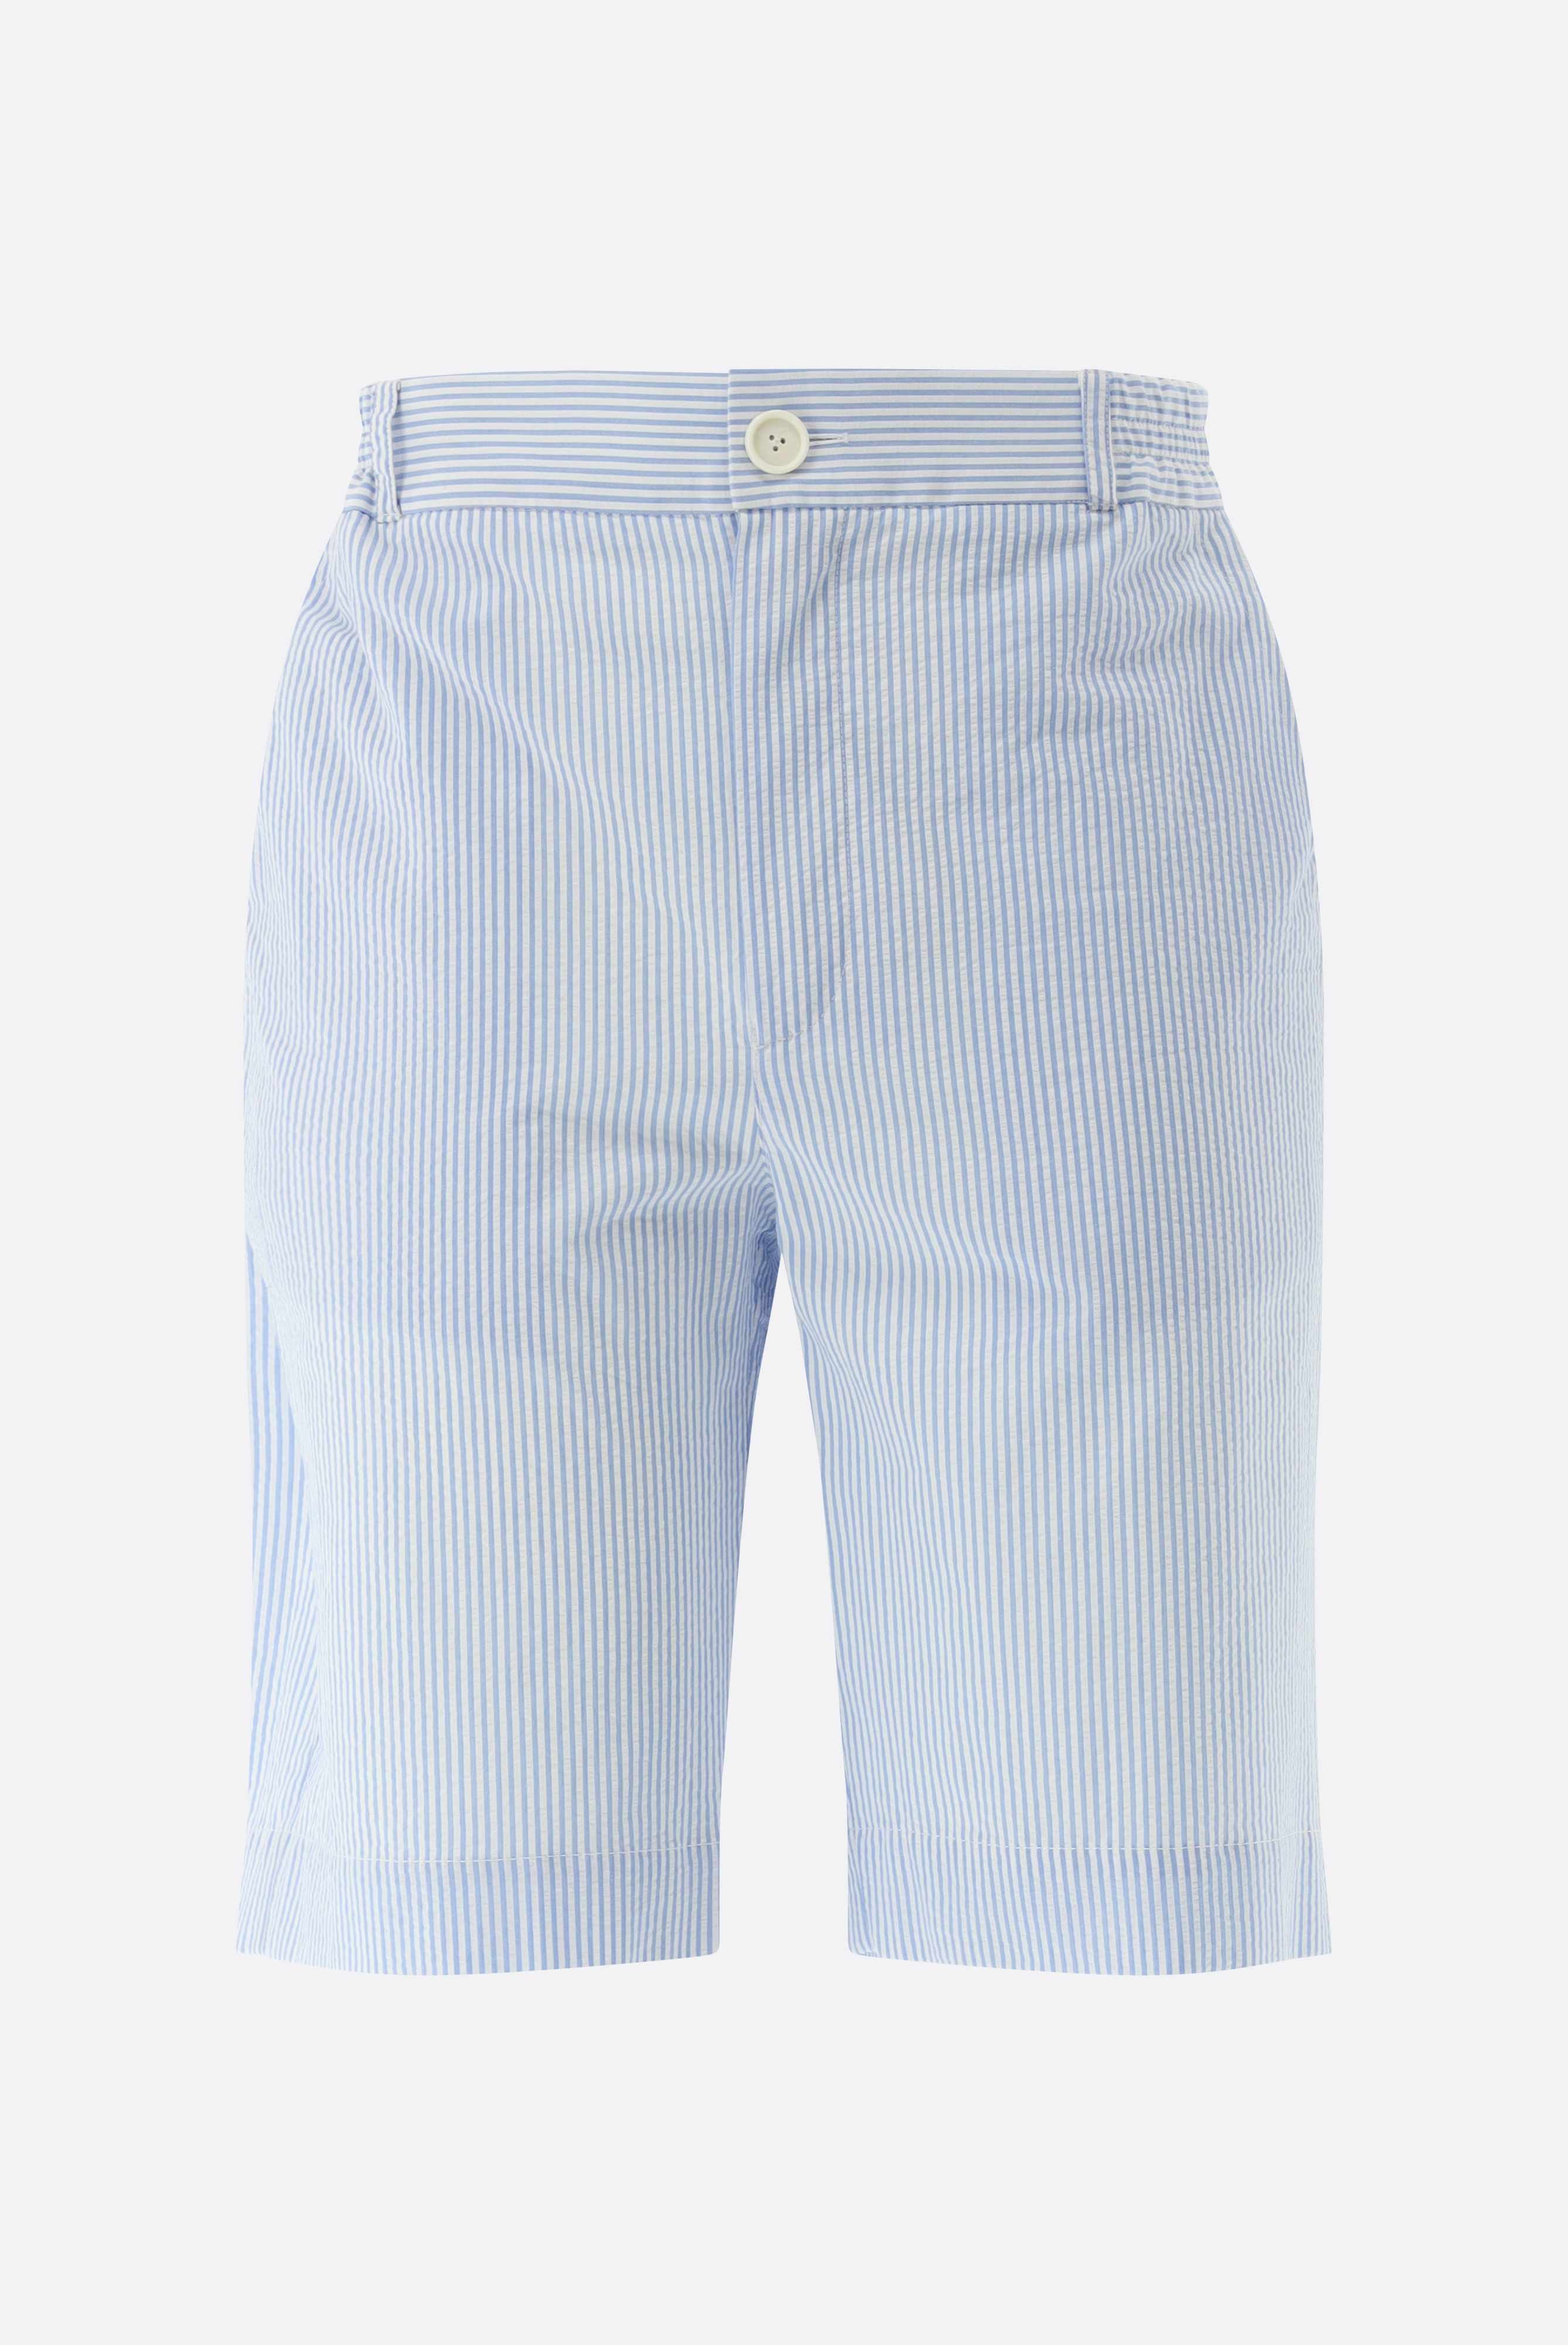 Jeans & Trousers+Striped Cotton Seersucker Bermudas+20.1218.S2.151054.720.48